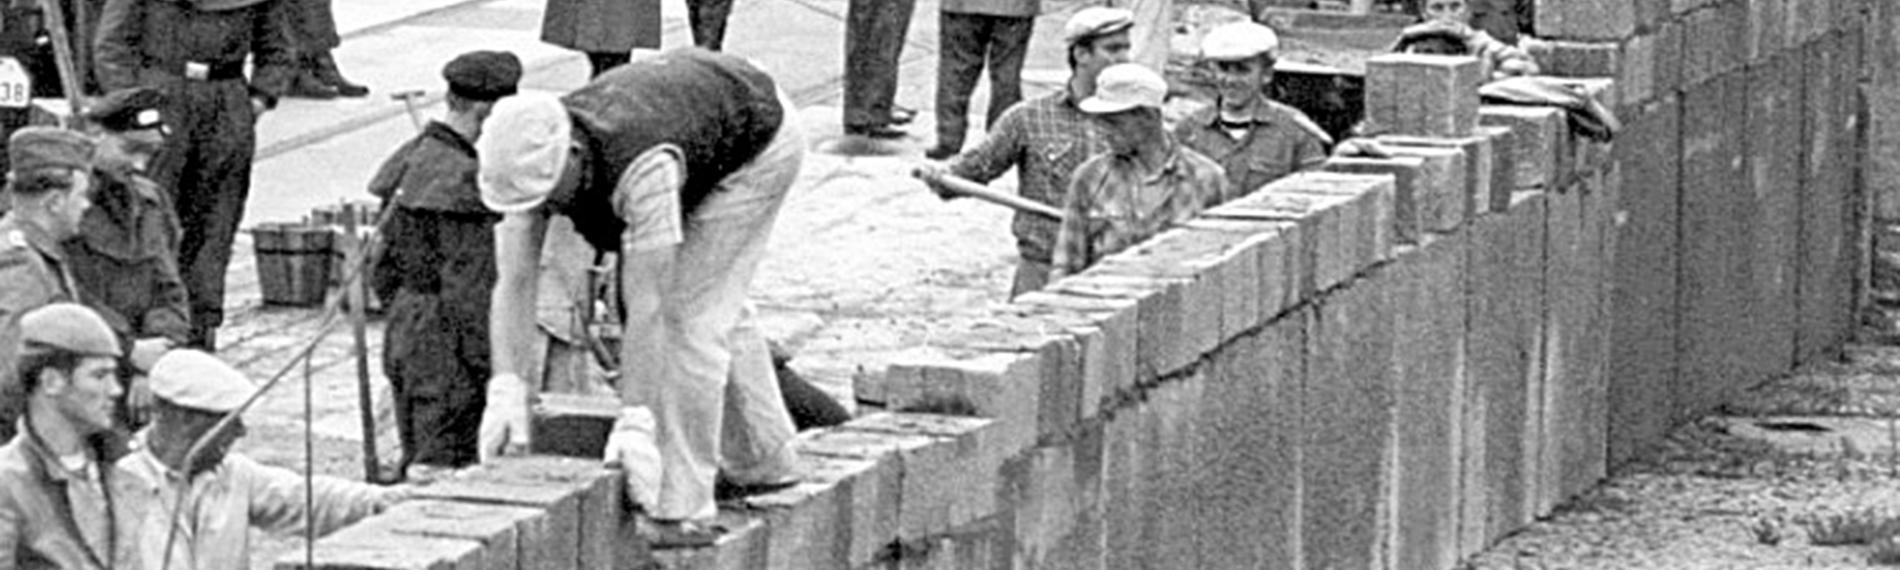 Archiv: Bau der Mauer am Potsdamer Platz, am 18.08.1961